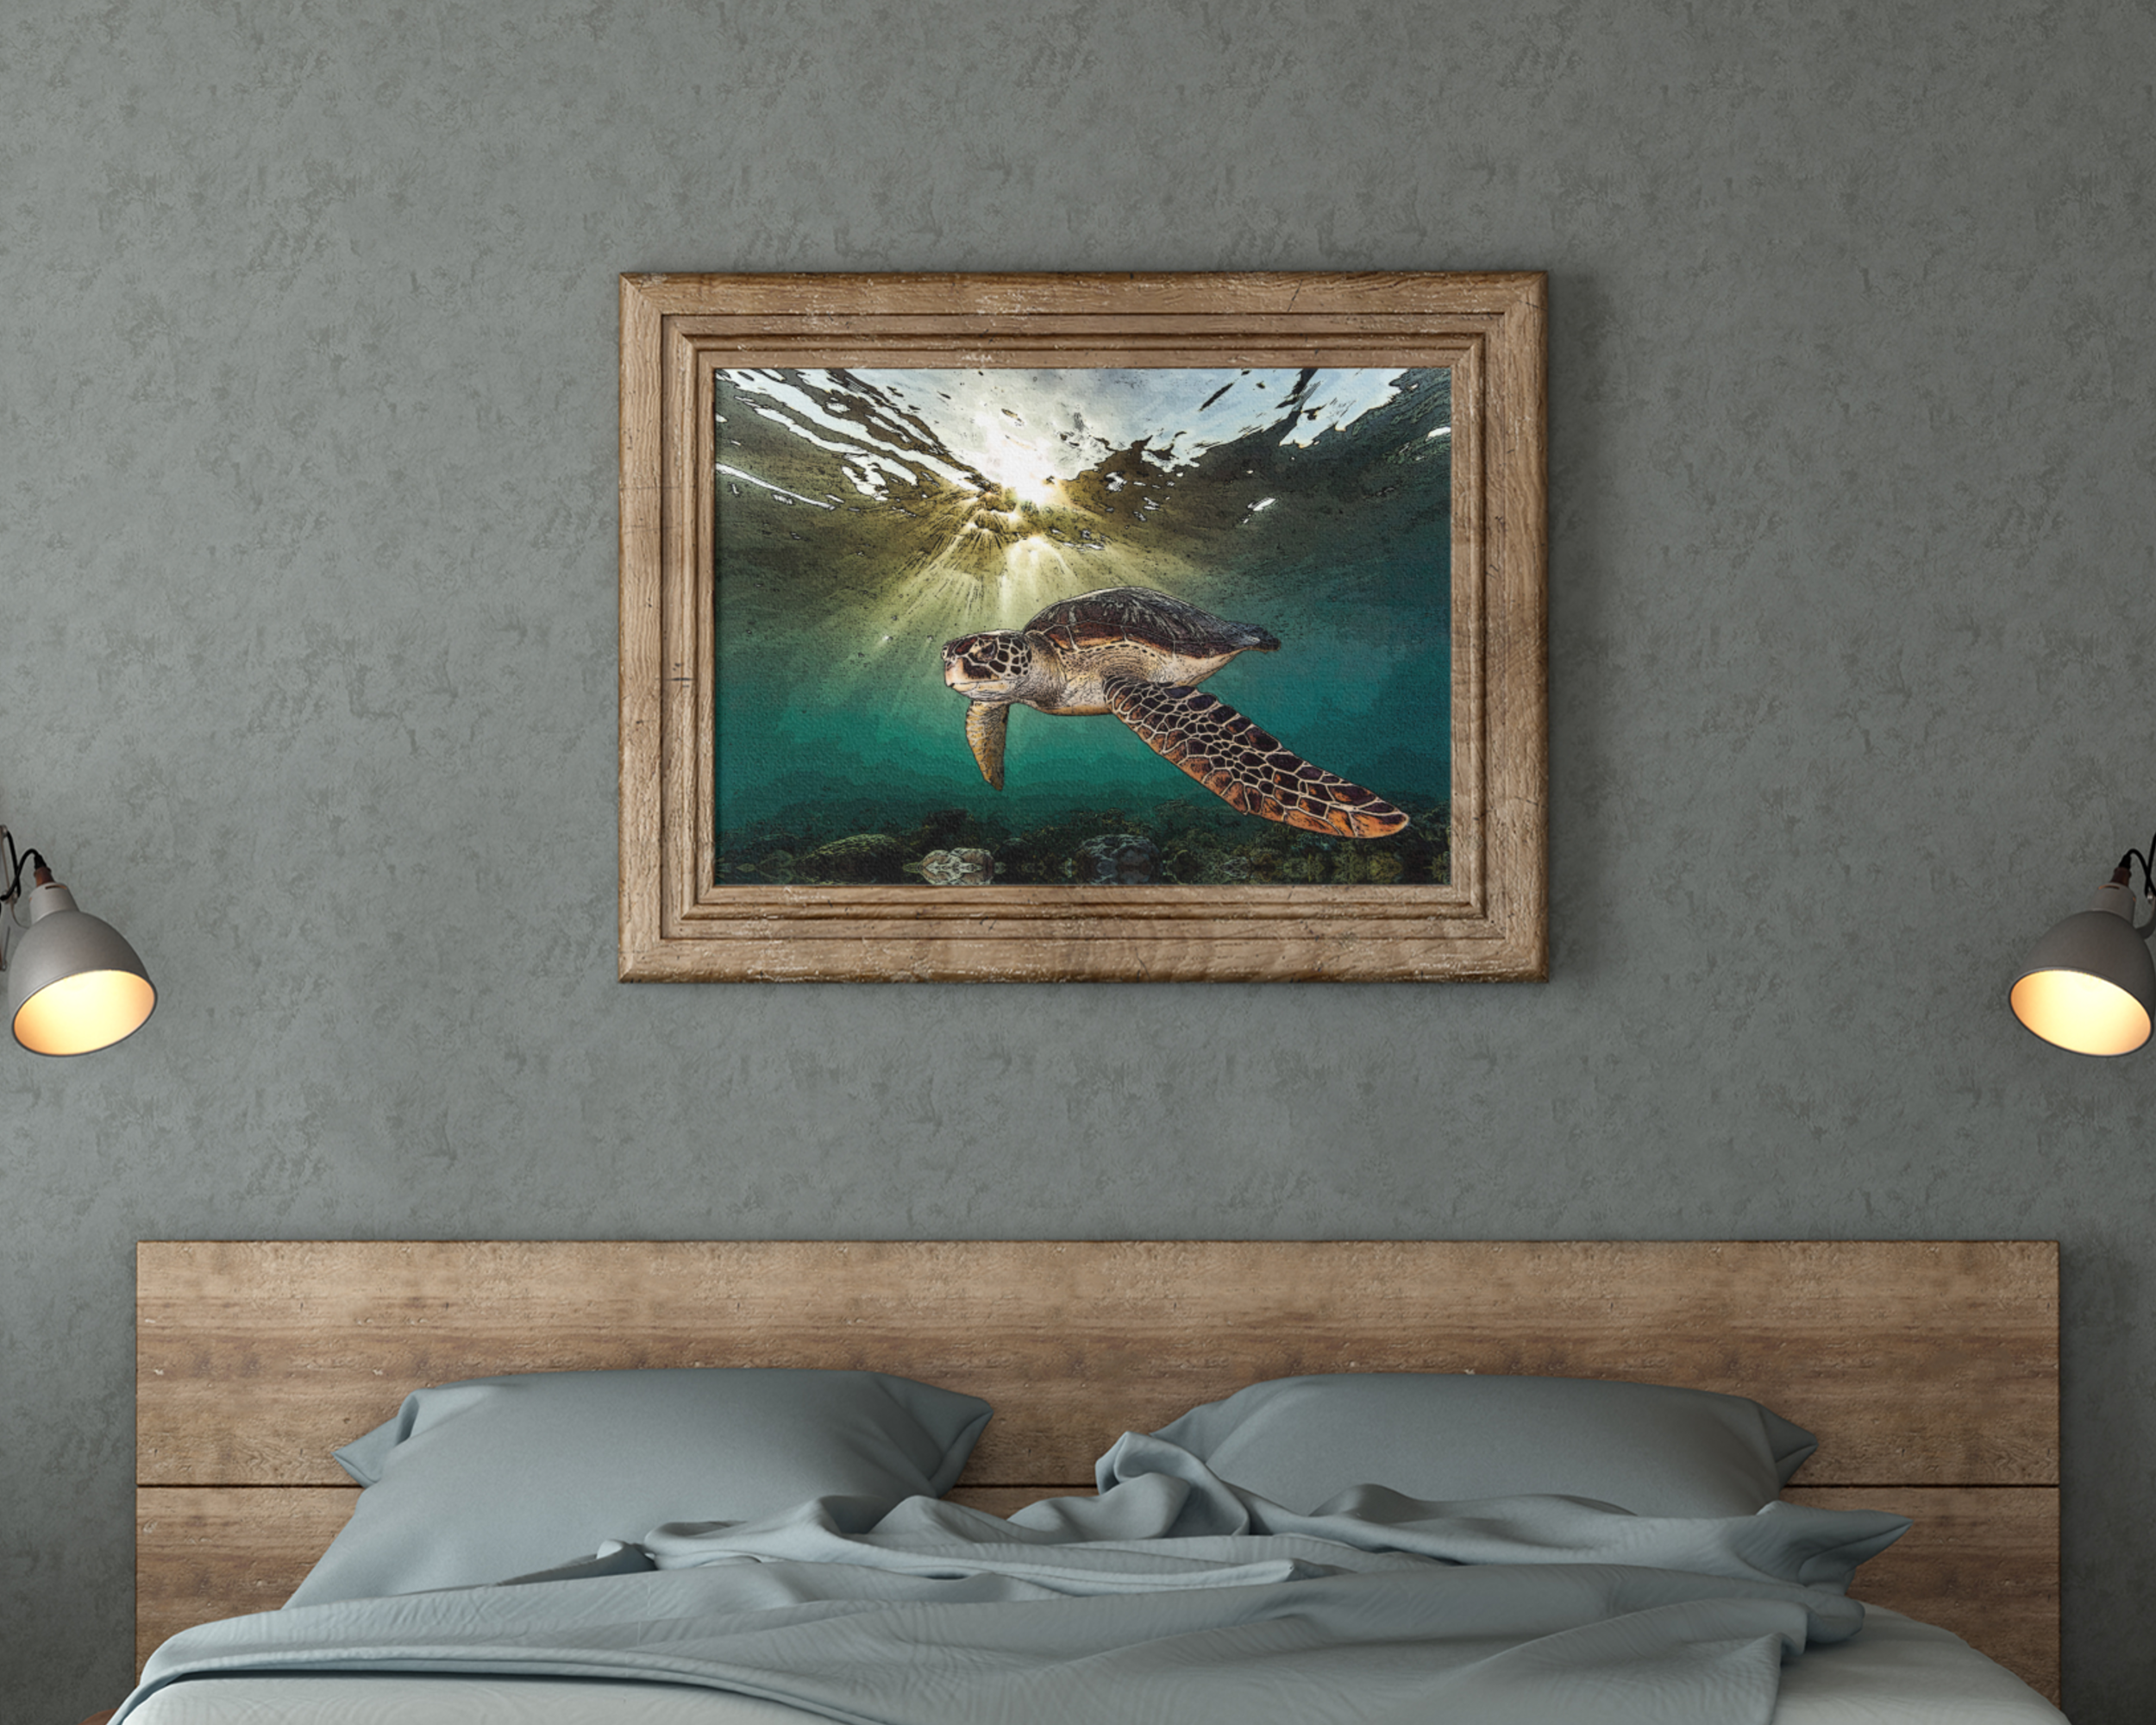 Green Sea Turtle Original Artwork - sold without frame